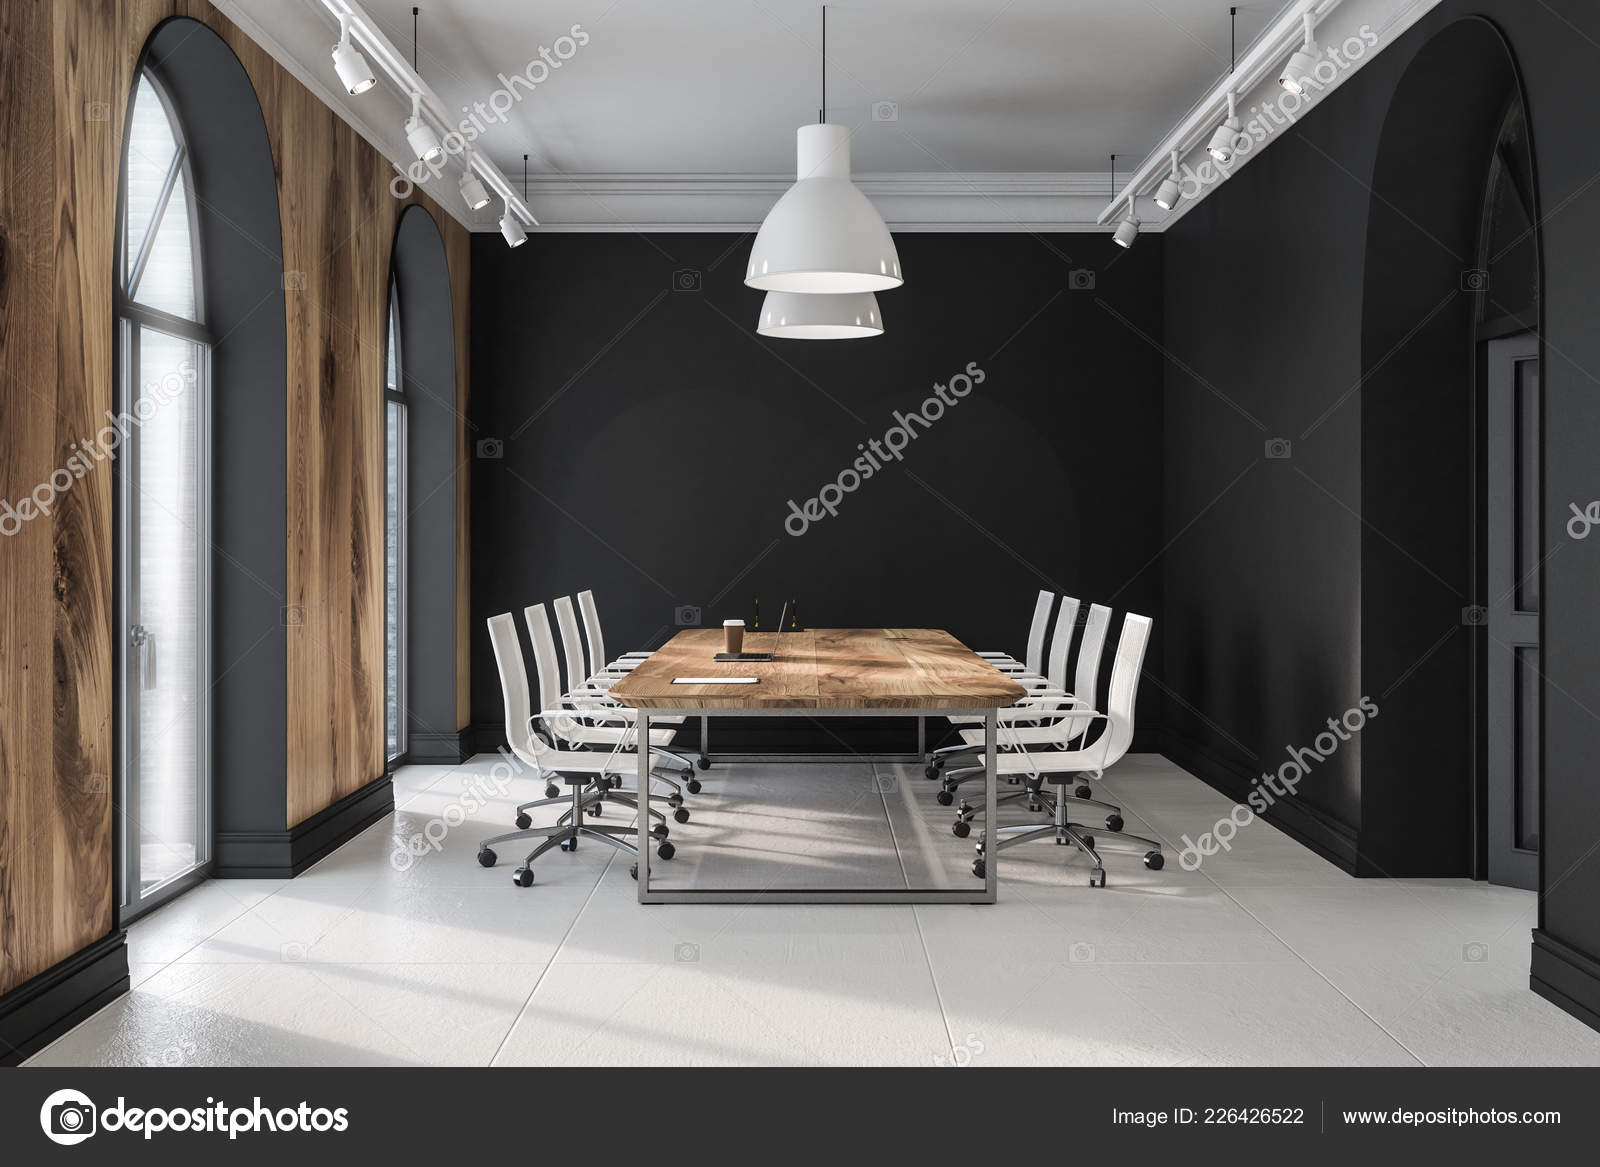 Modern Office Meeting Room Interior Black Walls Tiled Floor